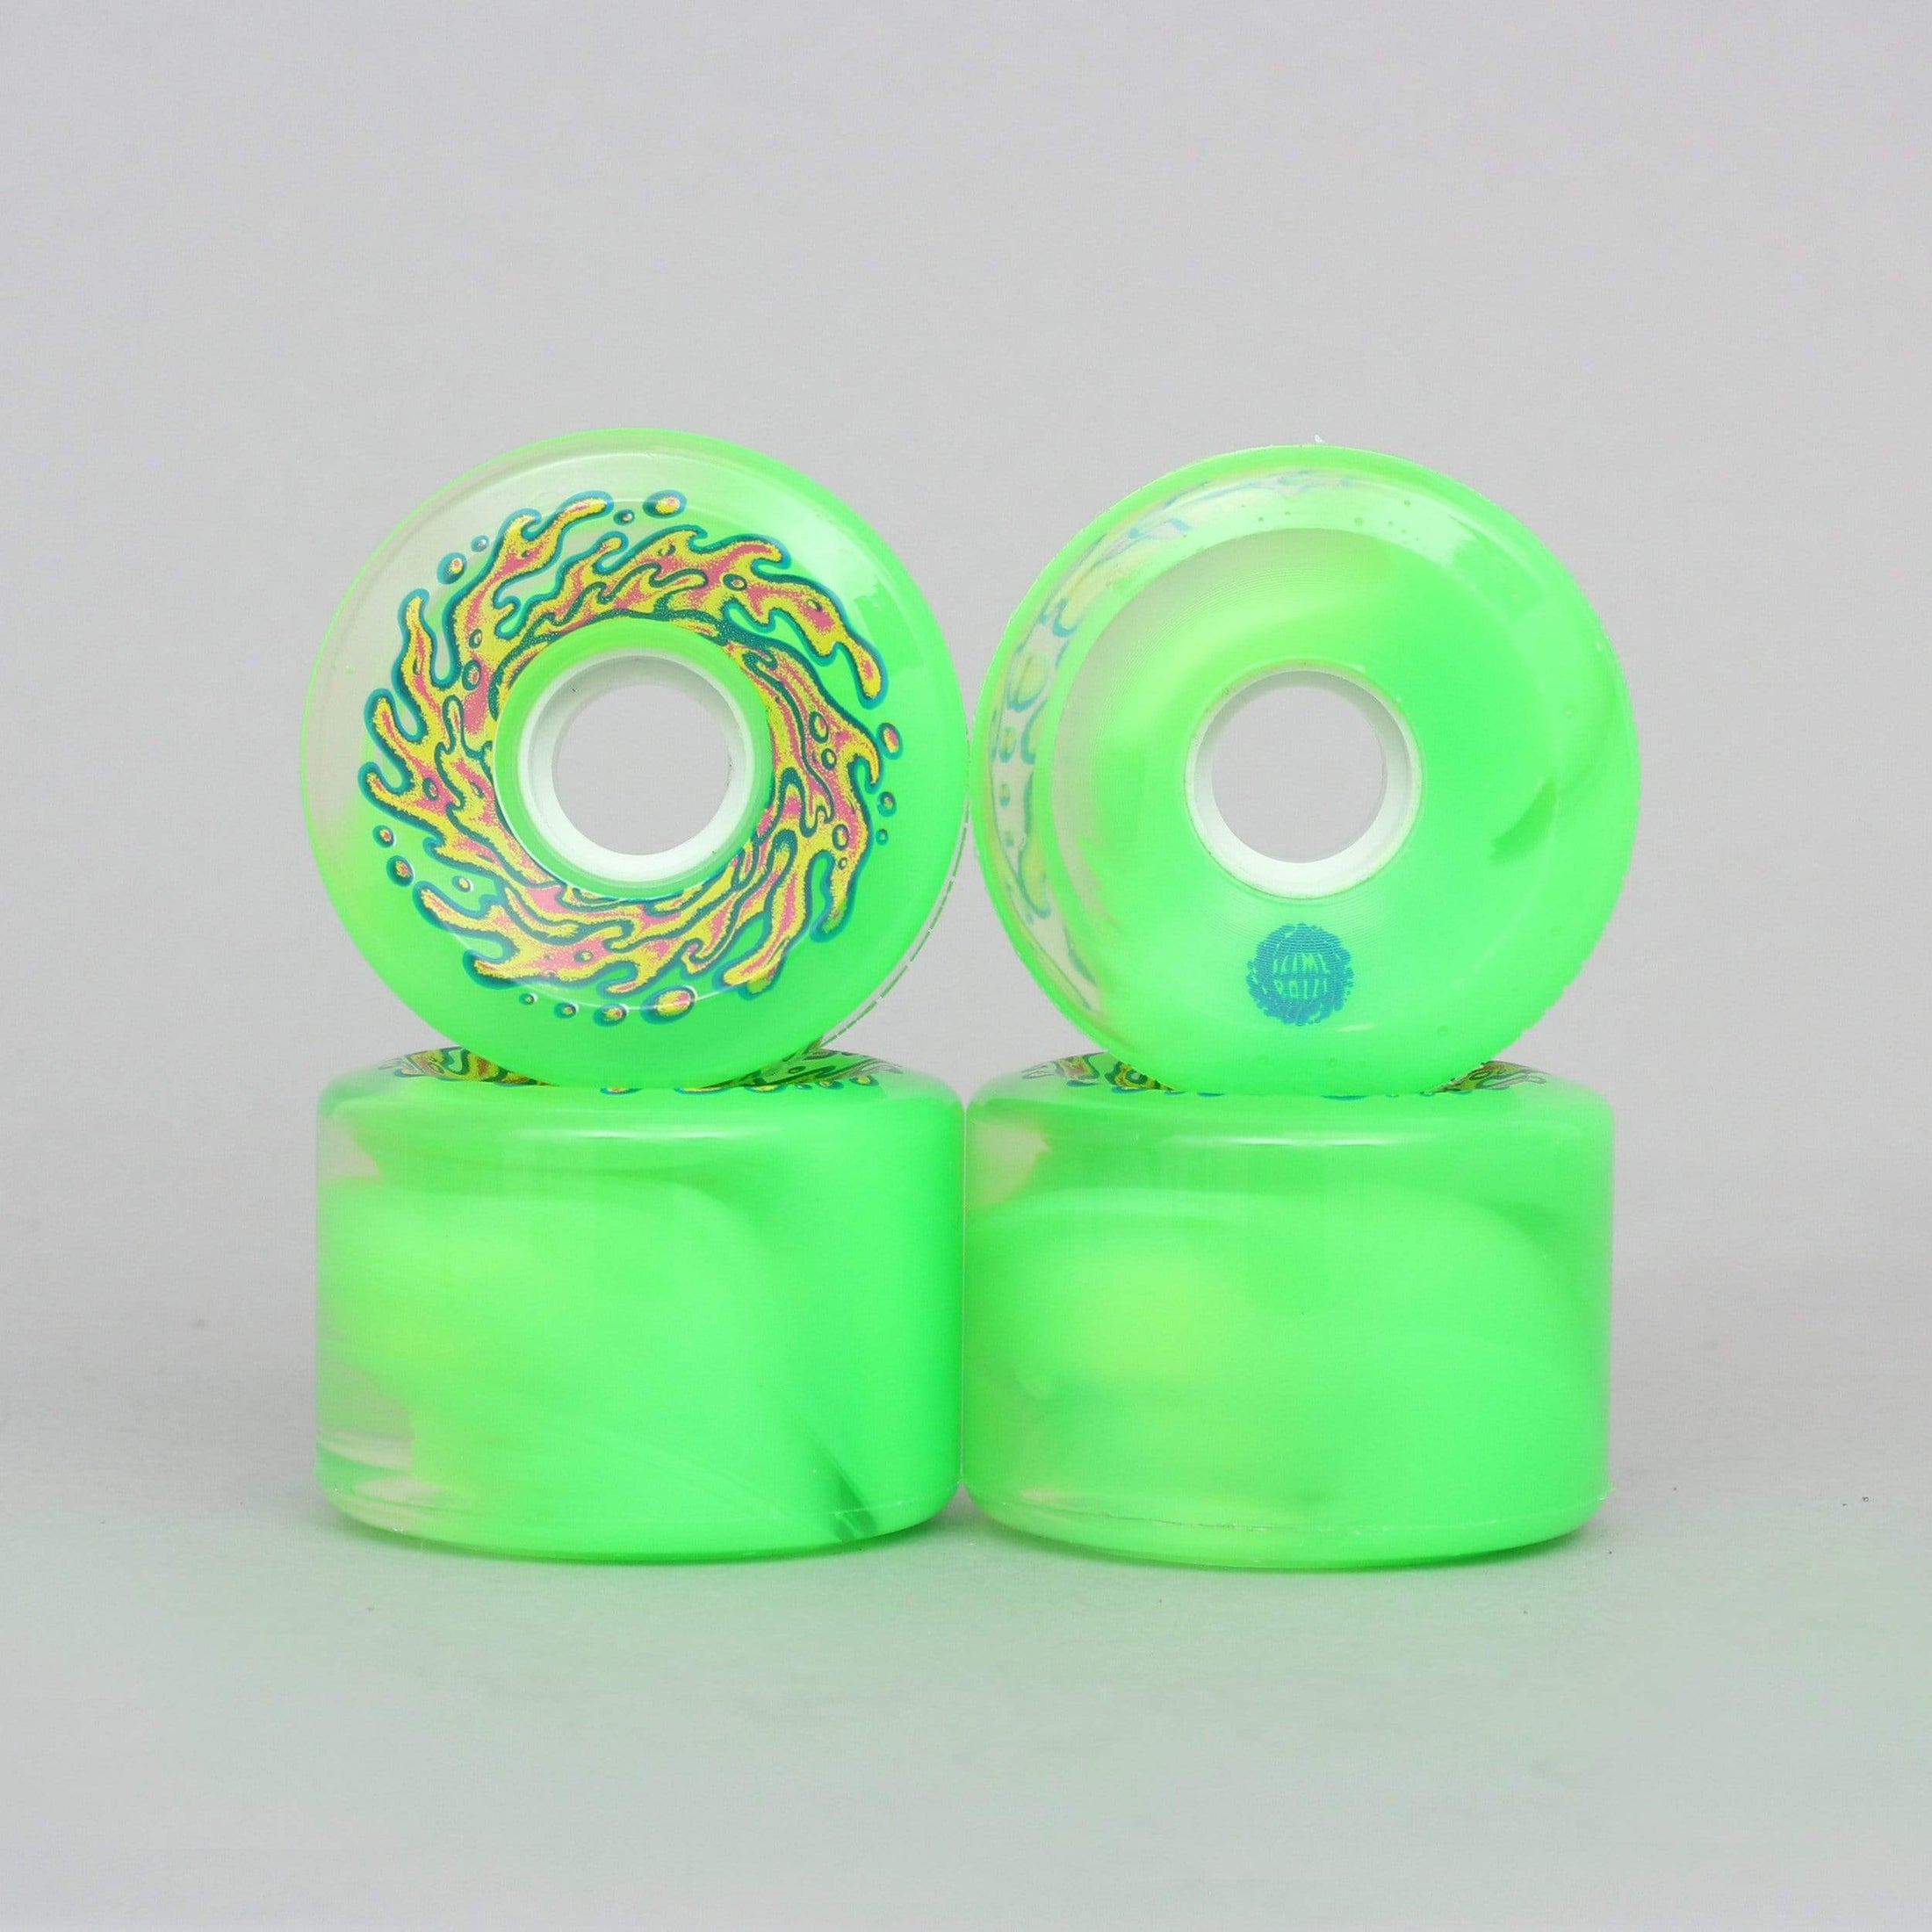 Santa Cruz 66mm 78A Slime Balls OG Slime Trans Wheels Green